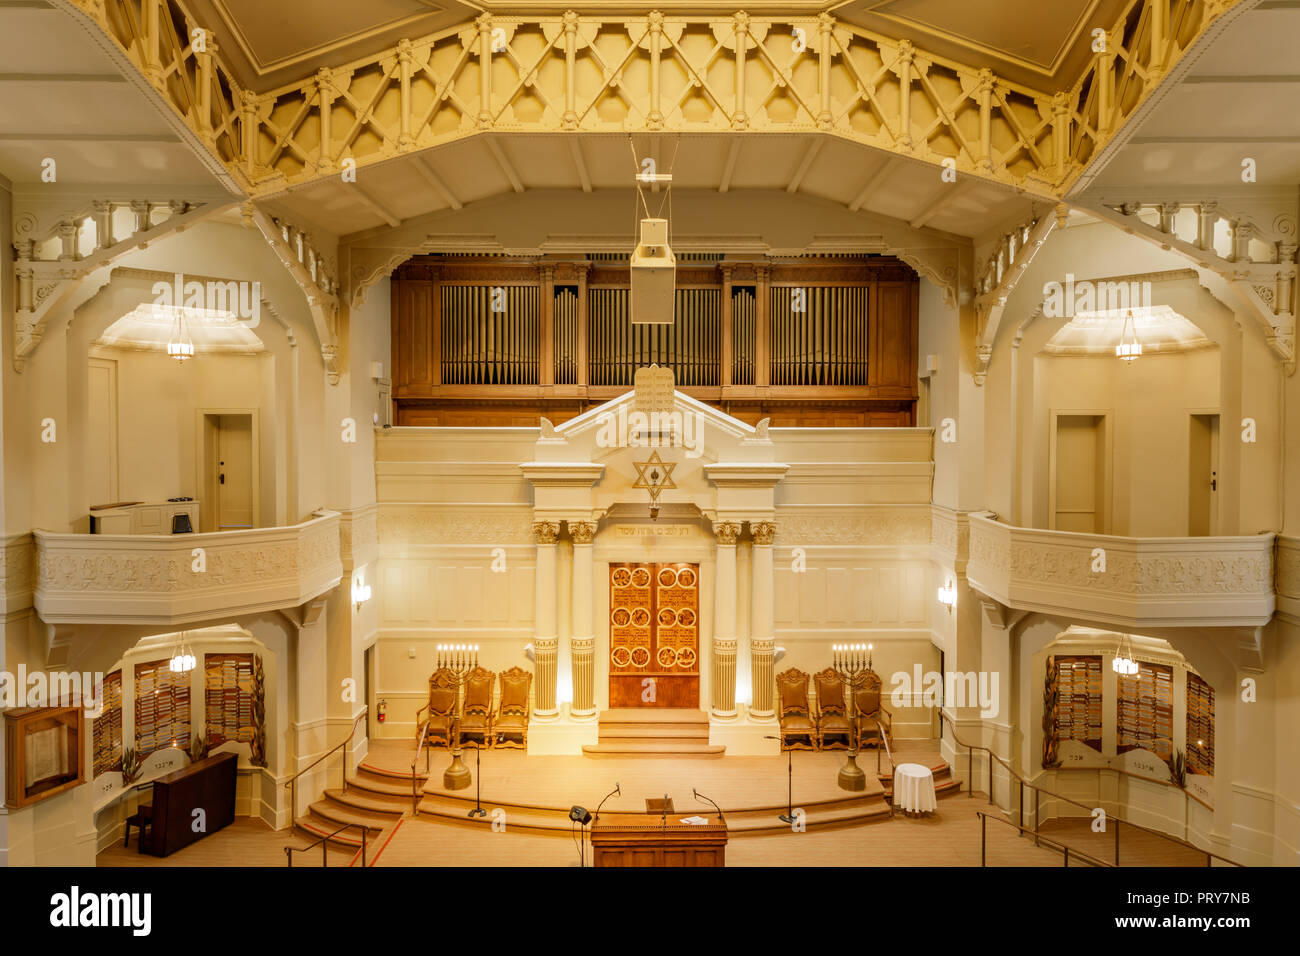 Oakland, Kalifornien - 30. September 2018: das Innere des Tempels Sinai Reform jüdische Synagoge. Stockfoto